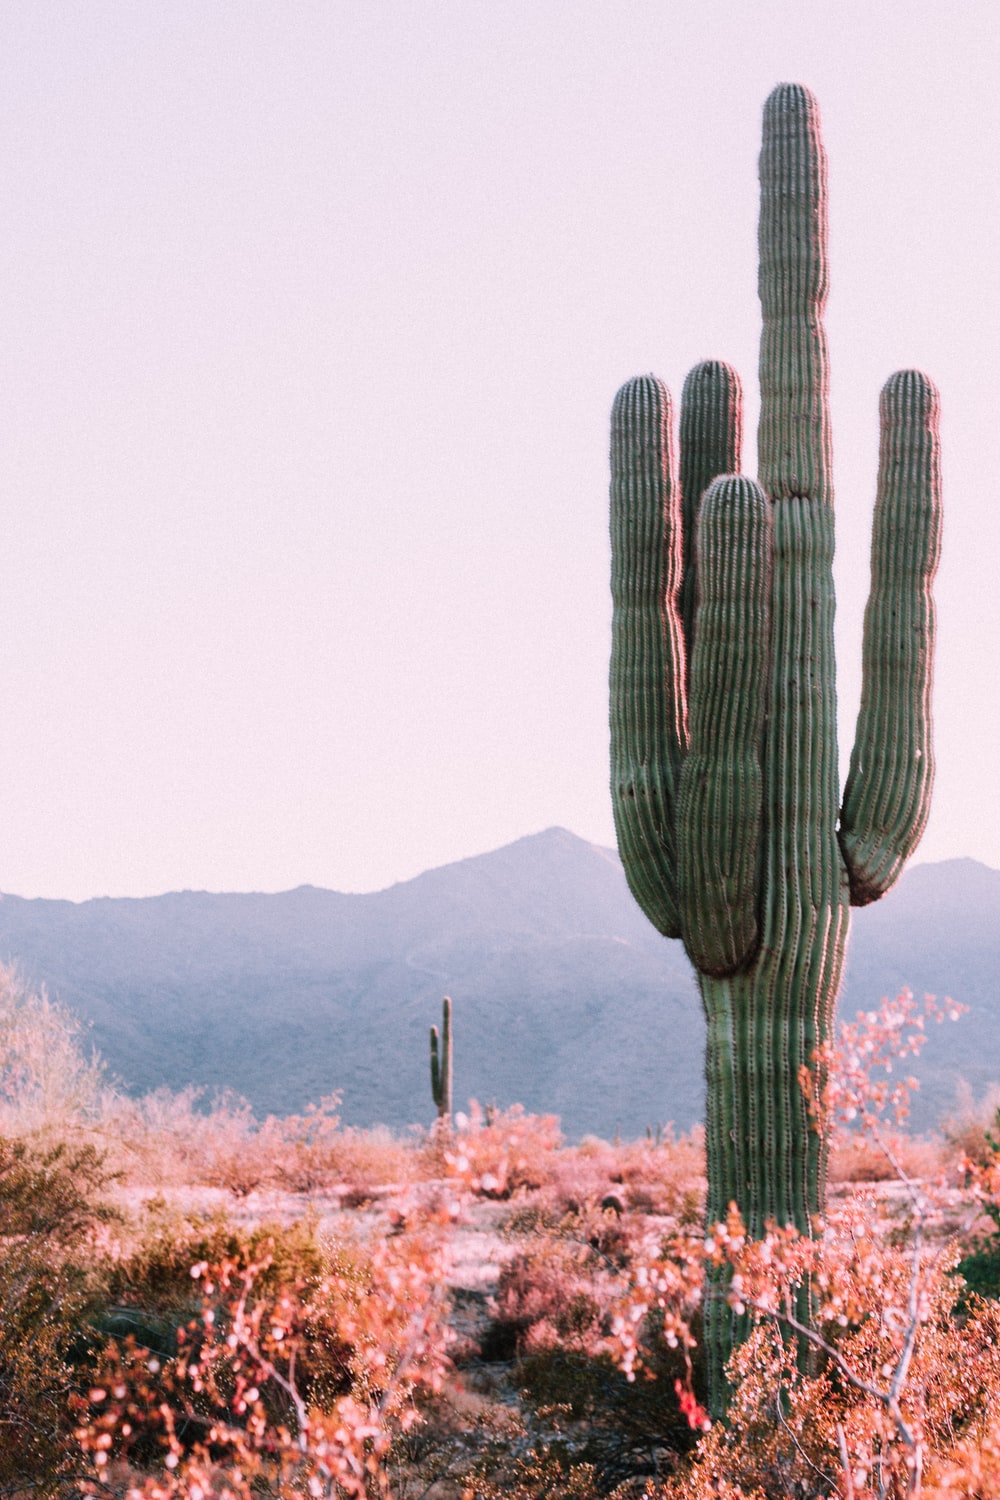 Desert Cactus Picture. Download Free Image